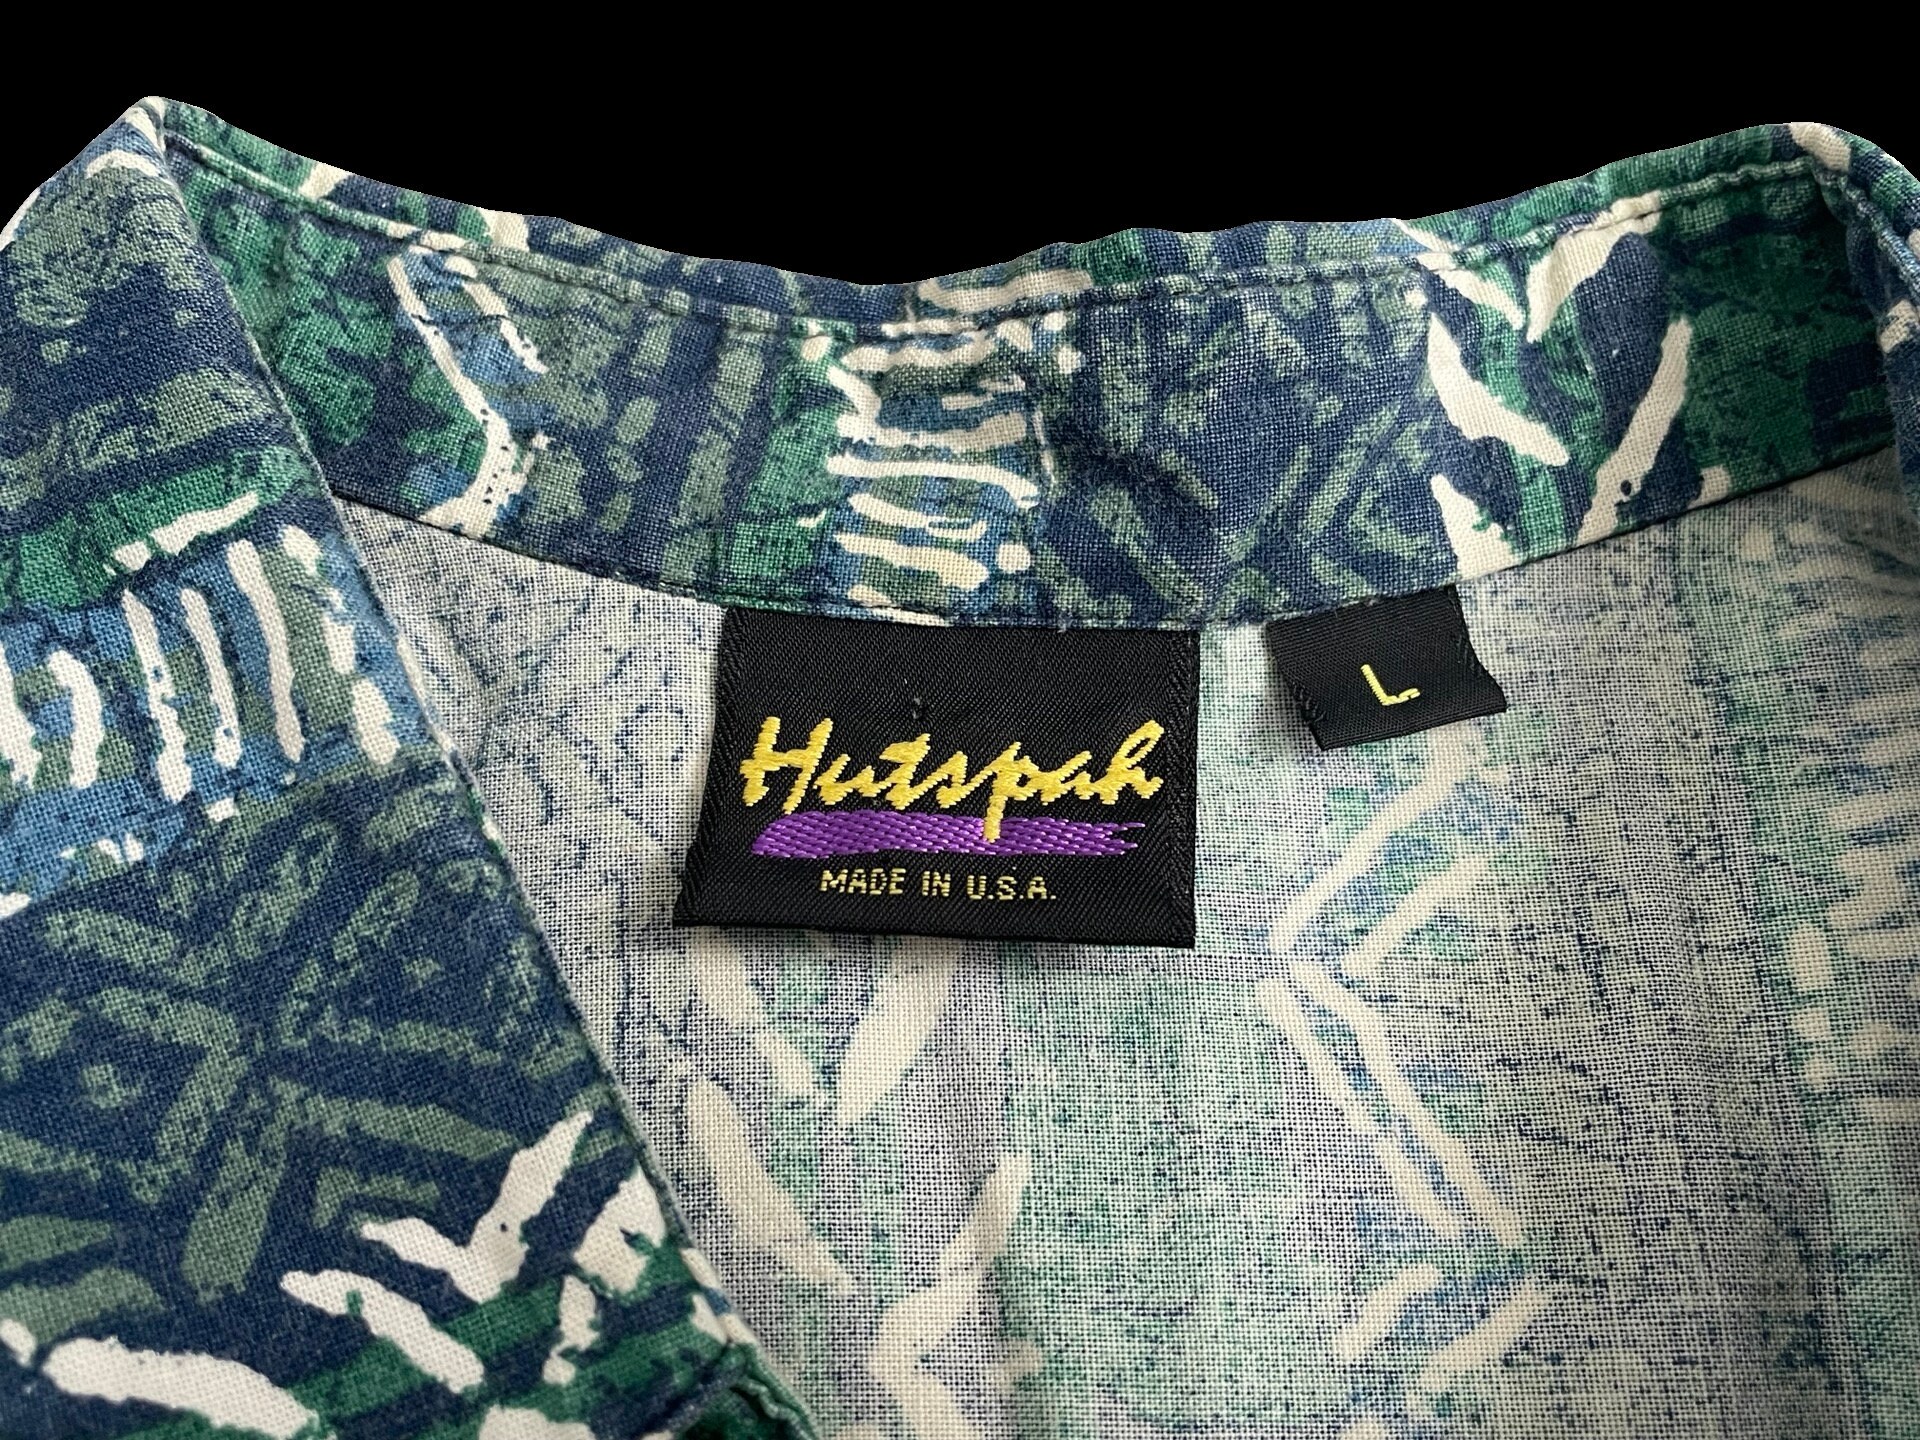 Hutspah, Shirts